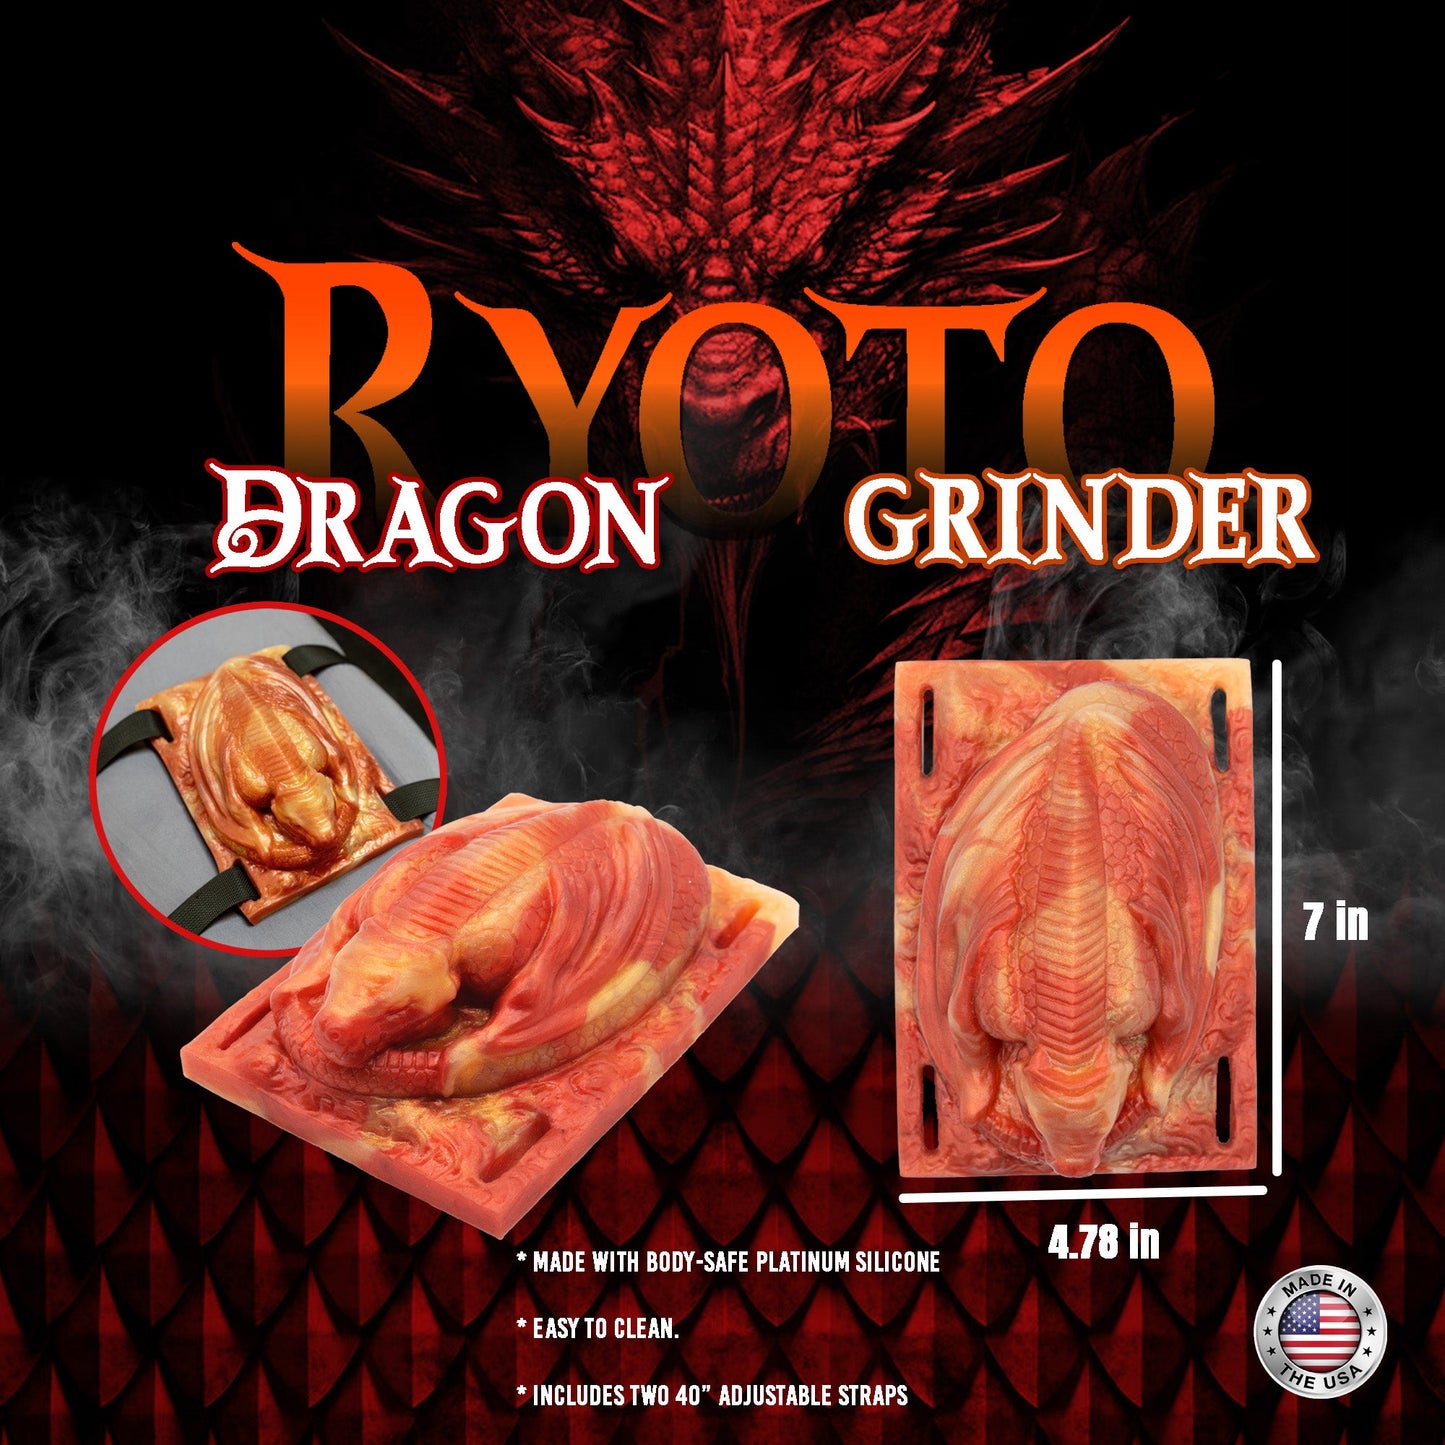 Ryoto Dragon Grinder